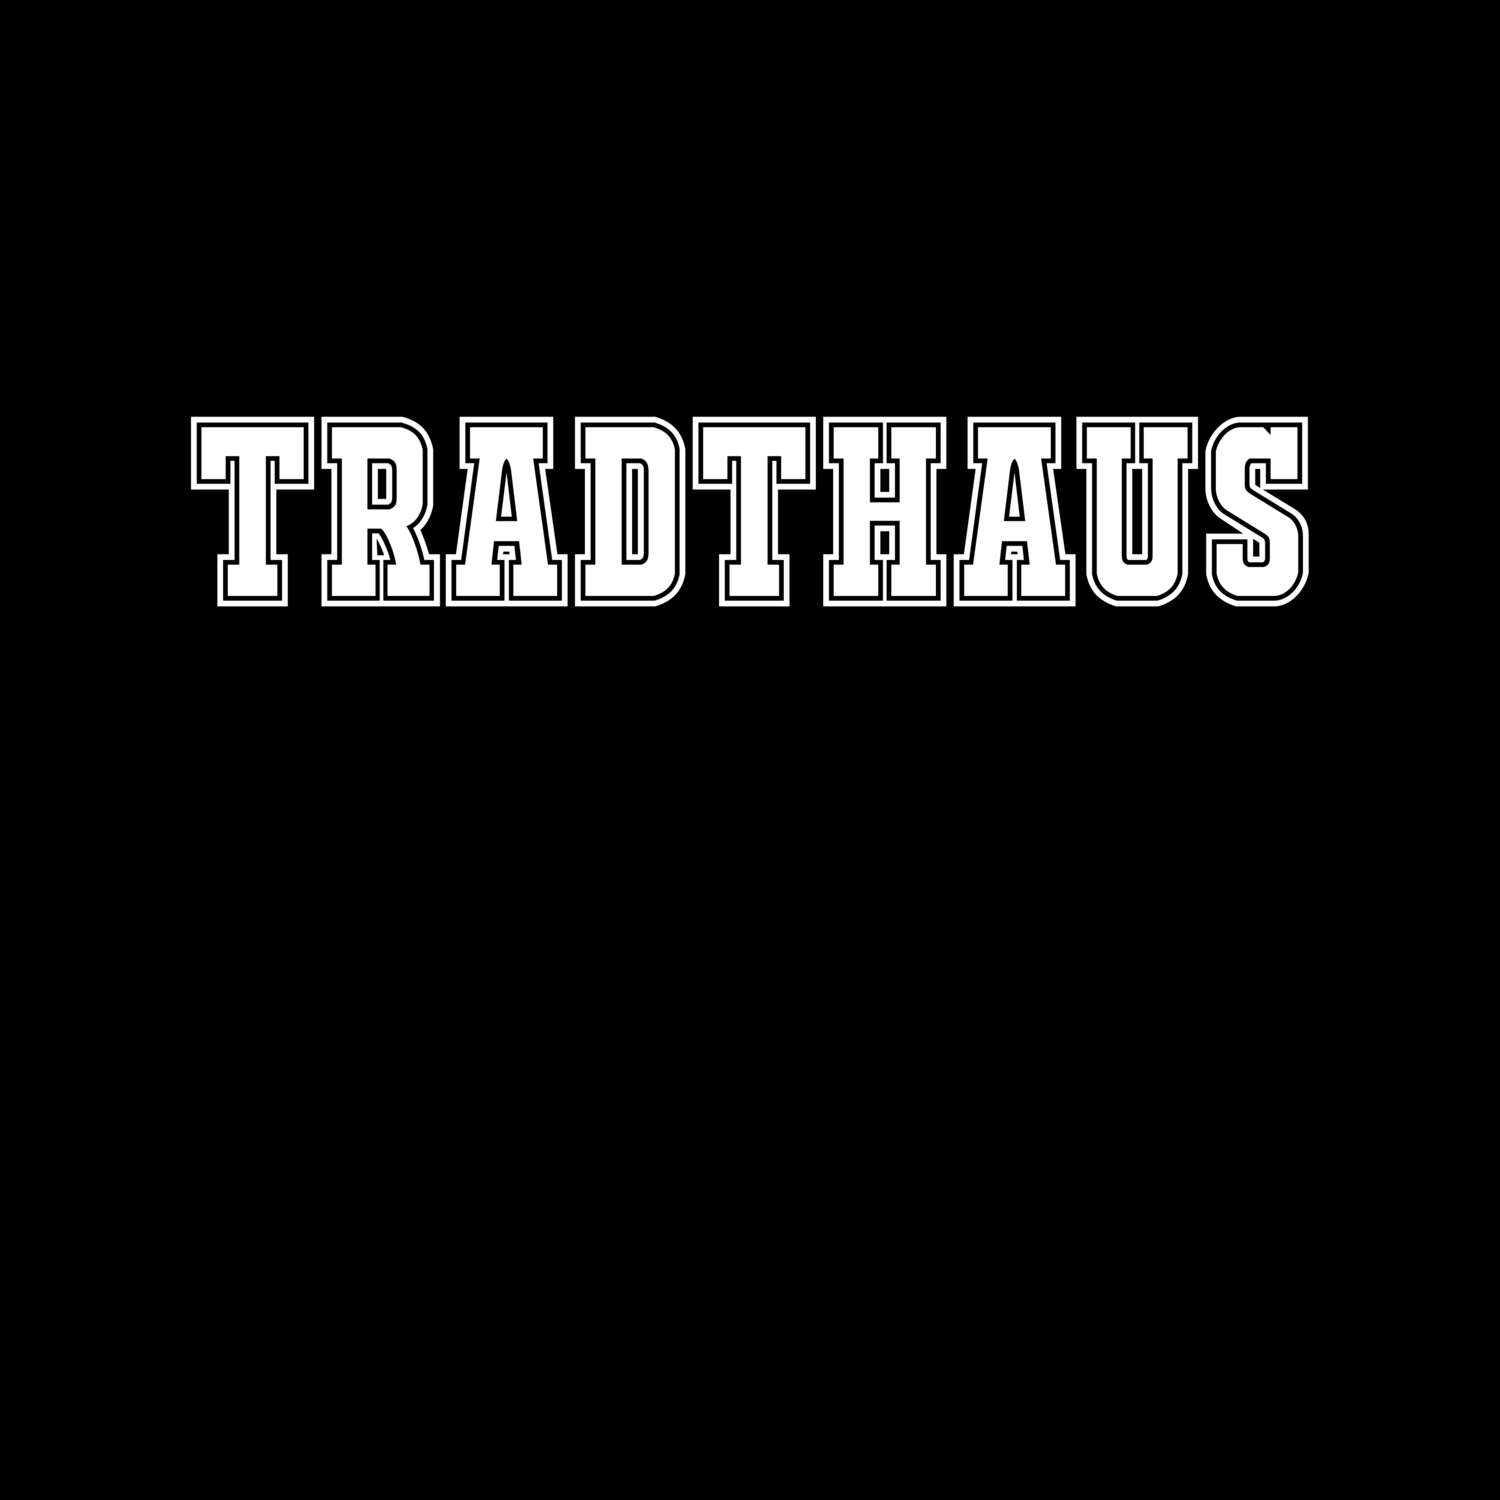 Tradthaus T-Shirt »Classic«